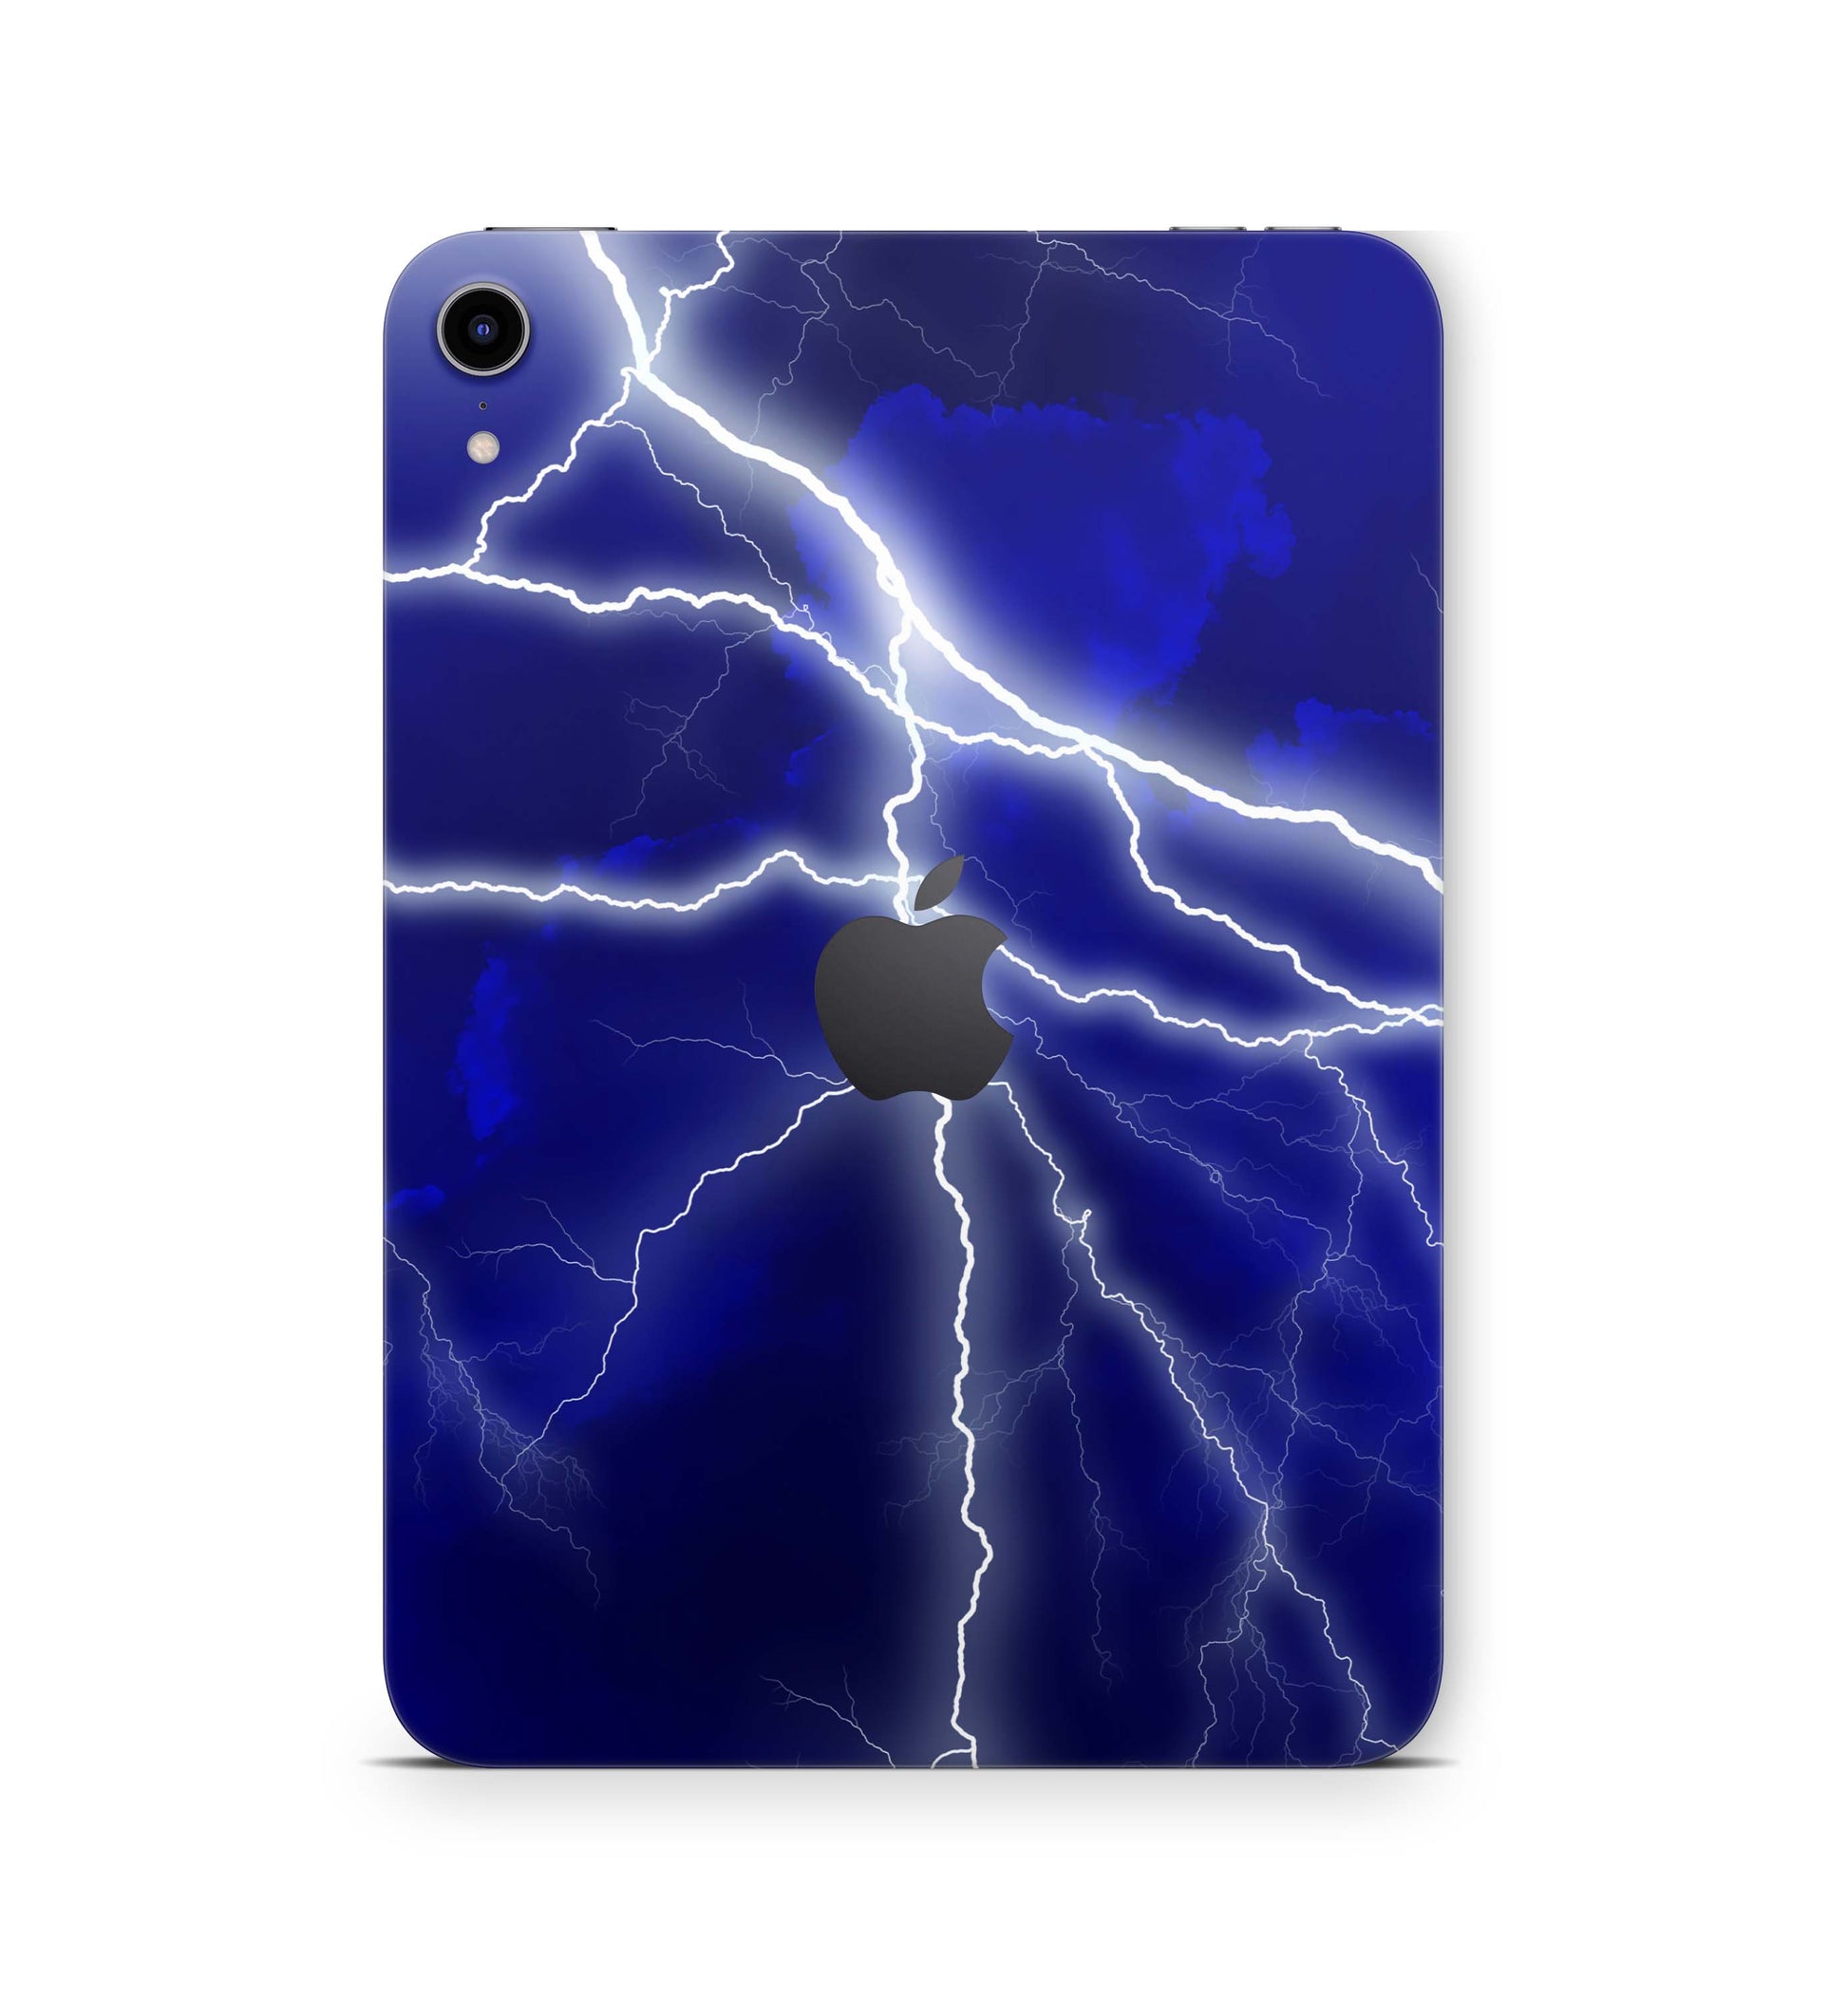 Apple iPad Skin Design Cover Folie Vinyl Skins & Wraps für alle iPad Modelle Aufkleber Skins4u Apocalypse-blue  